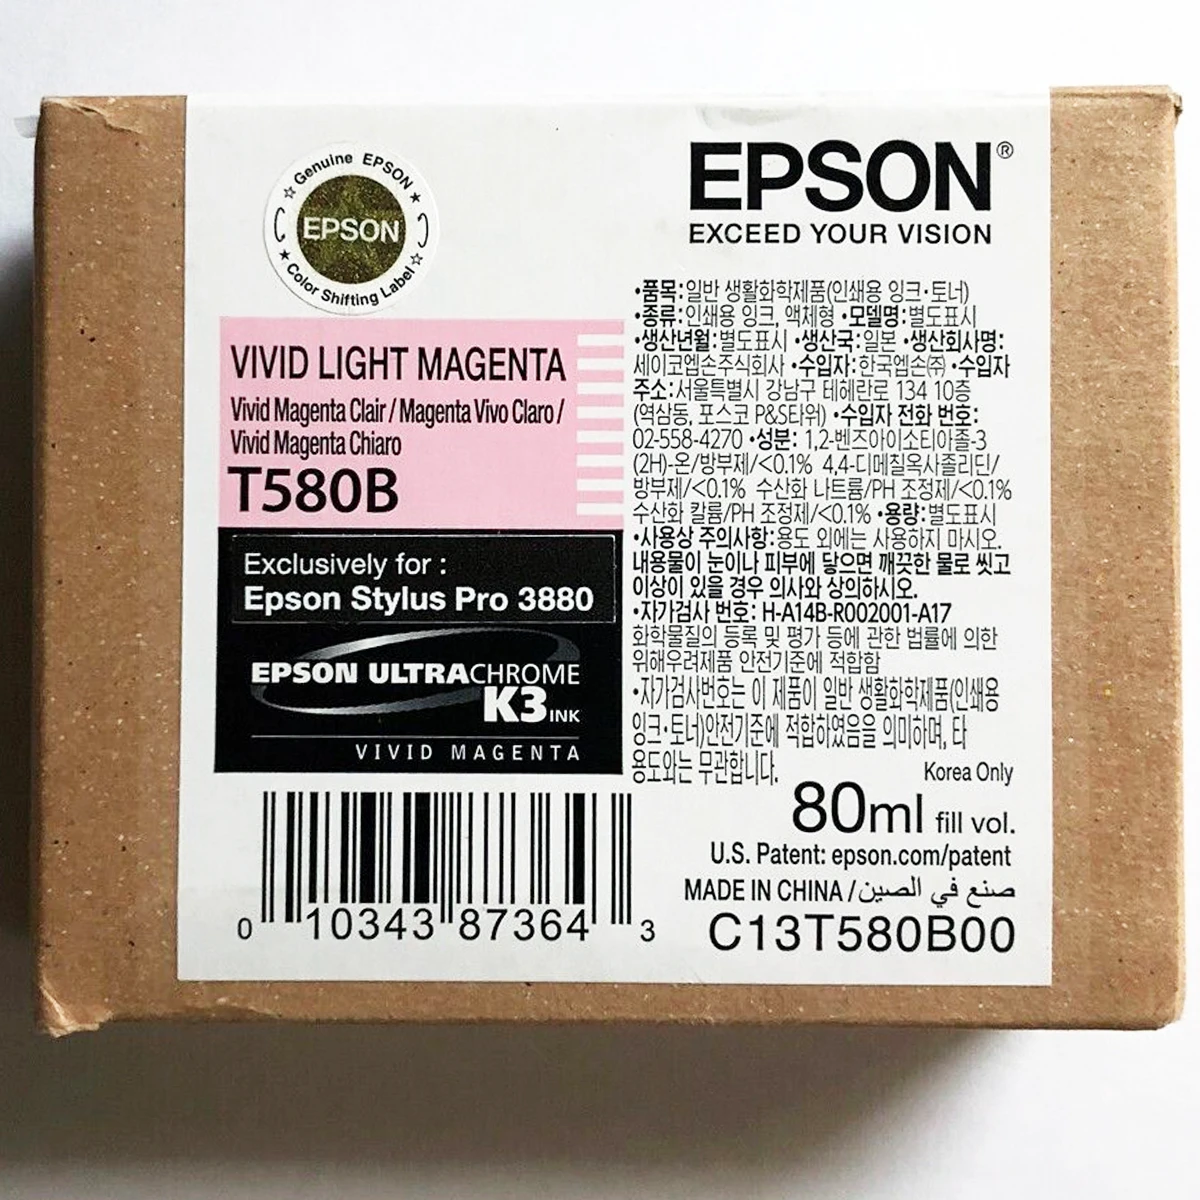 Epson P800 Printer T850B Vivid Light Magenta Ink